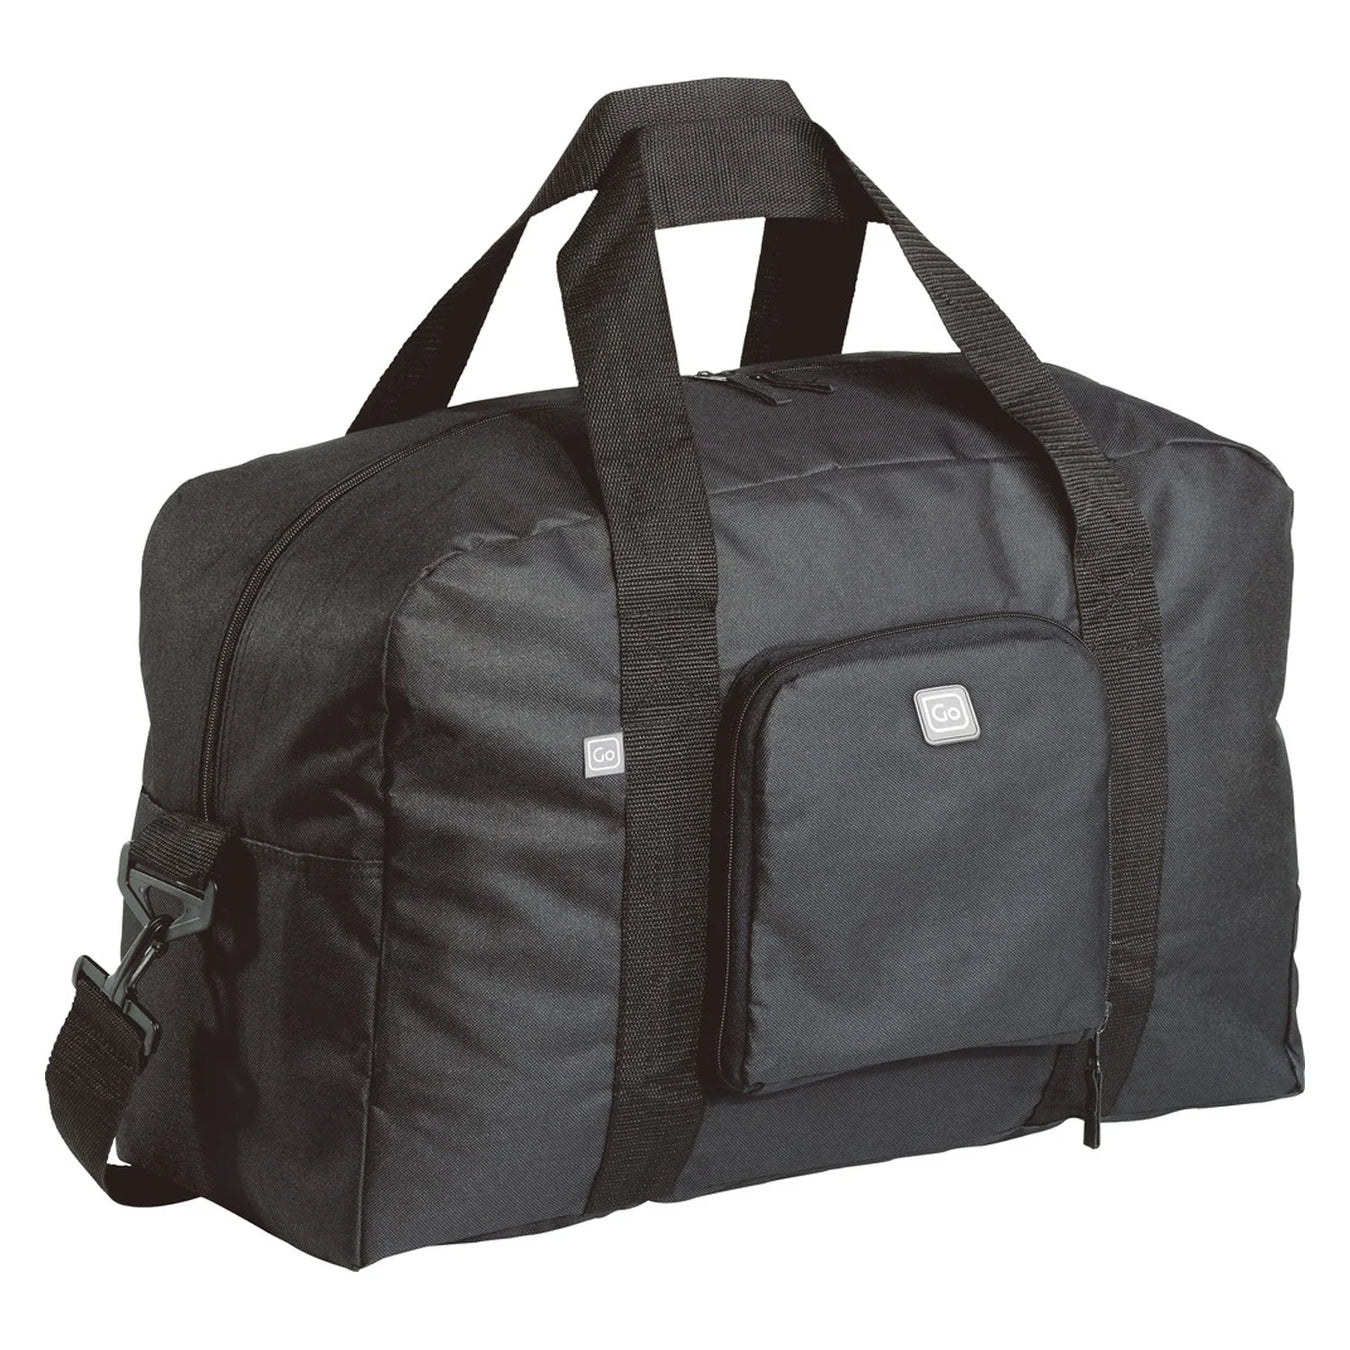 Go Travel's Duffel Bags